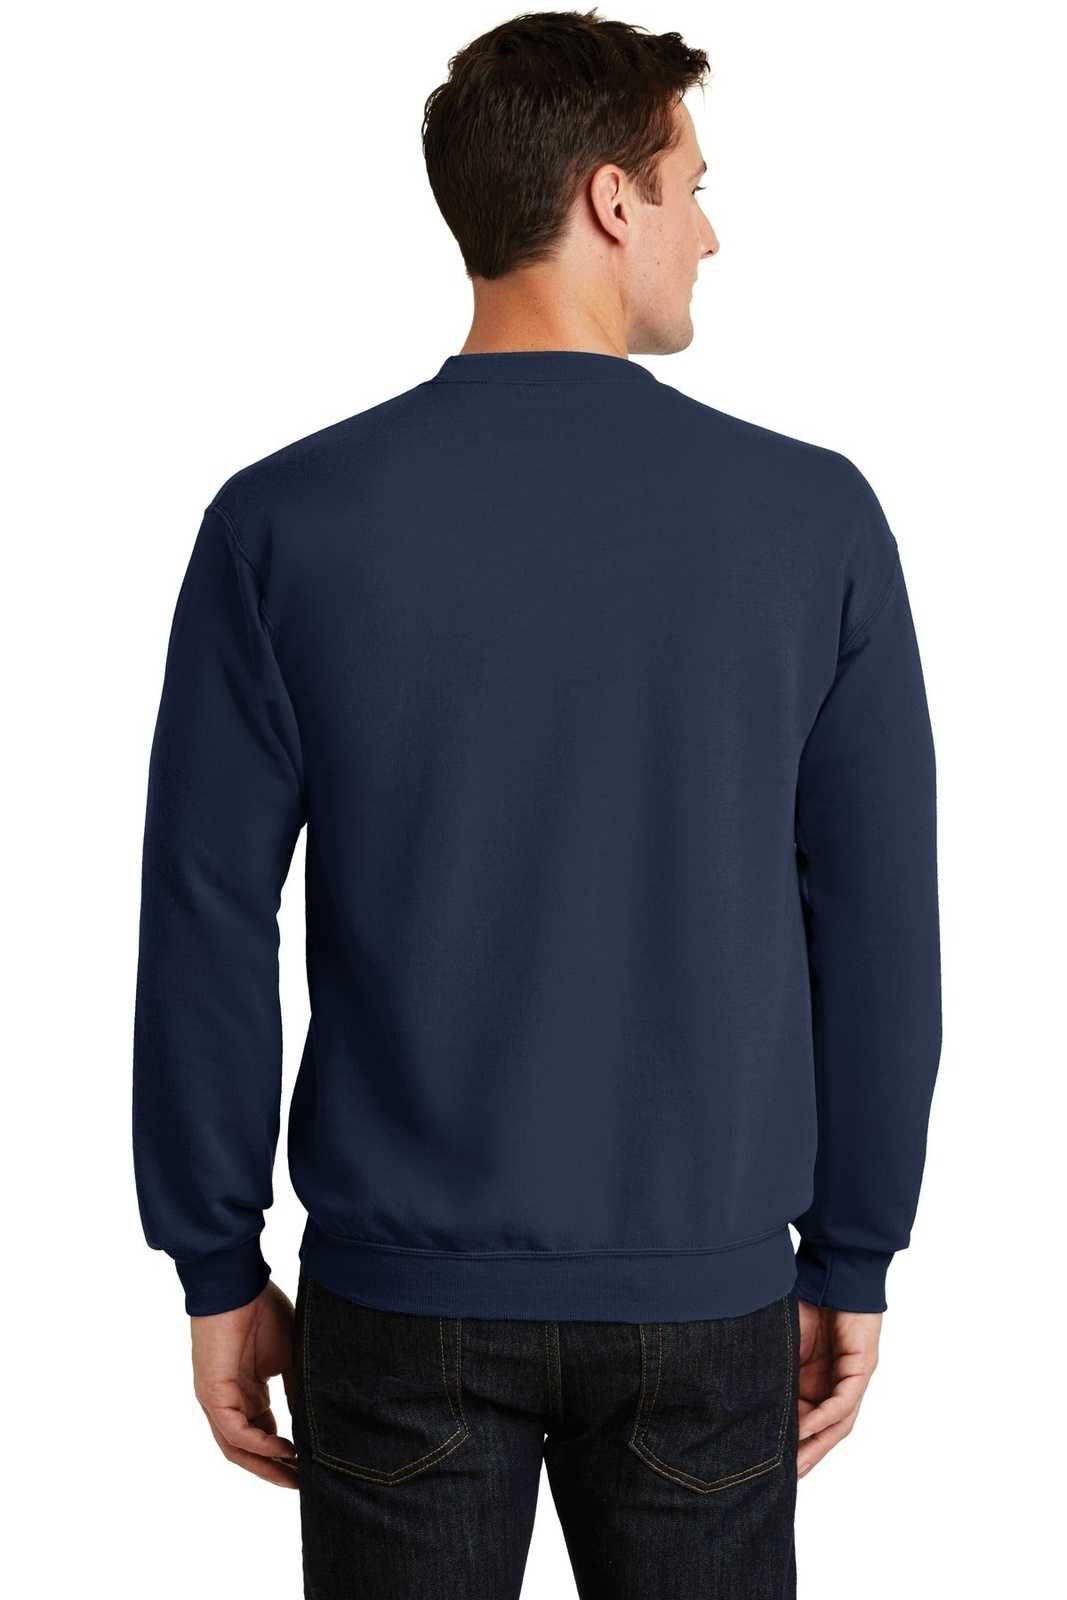 Port & Company PC78 Core Fleece Crewneck Sweatshirt - Navy - HIT a Double - 1